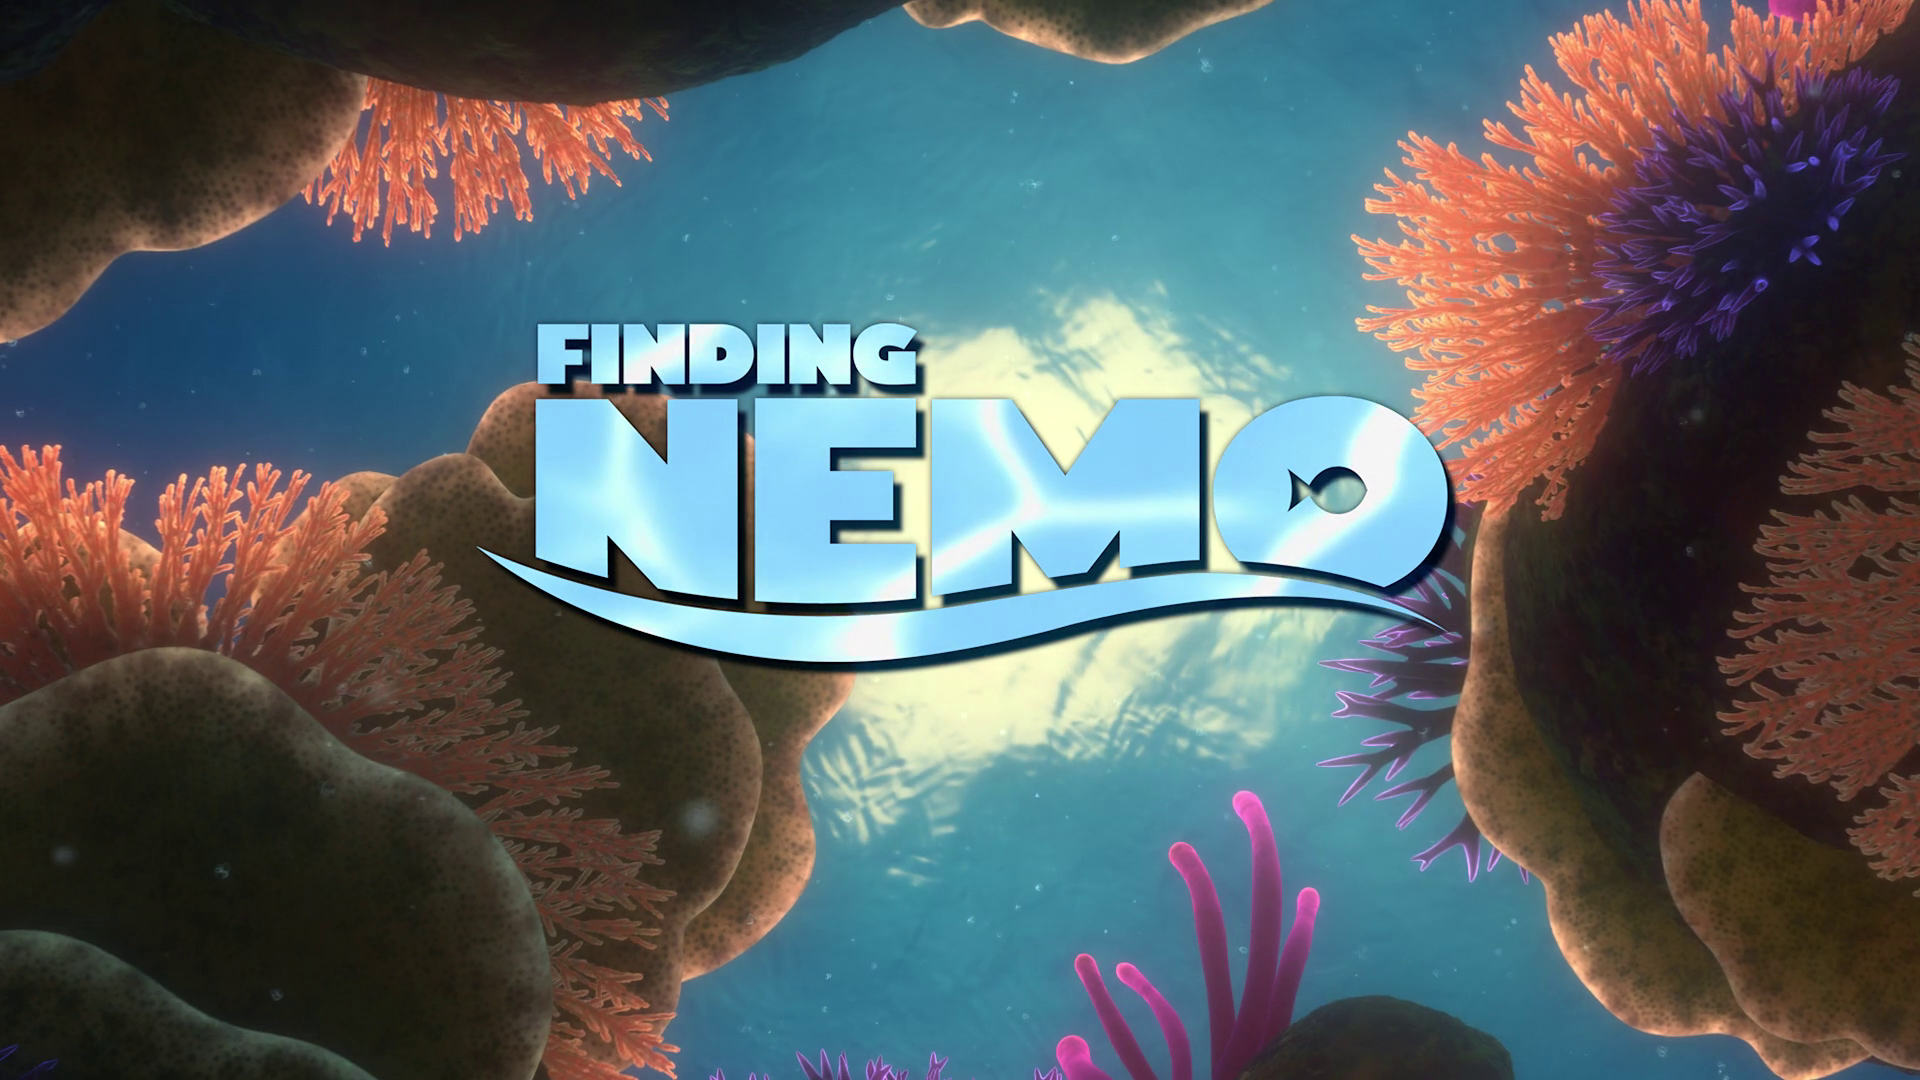 Disney Pixar Finding Nemo + Finding Dory Double Pack